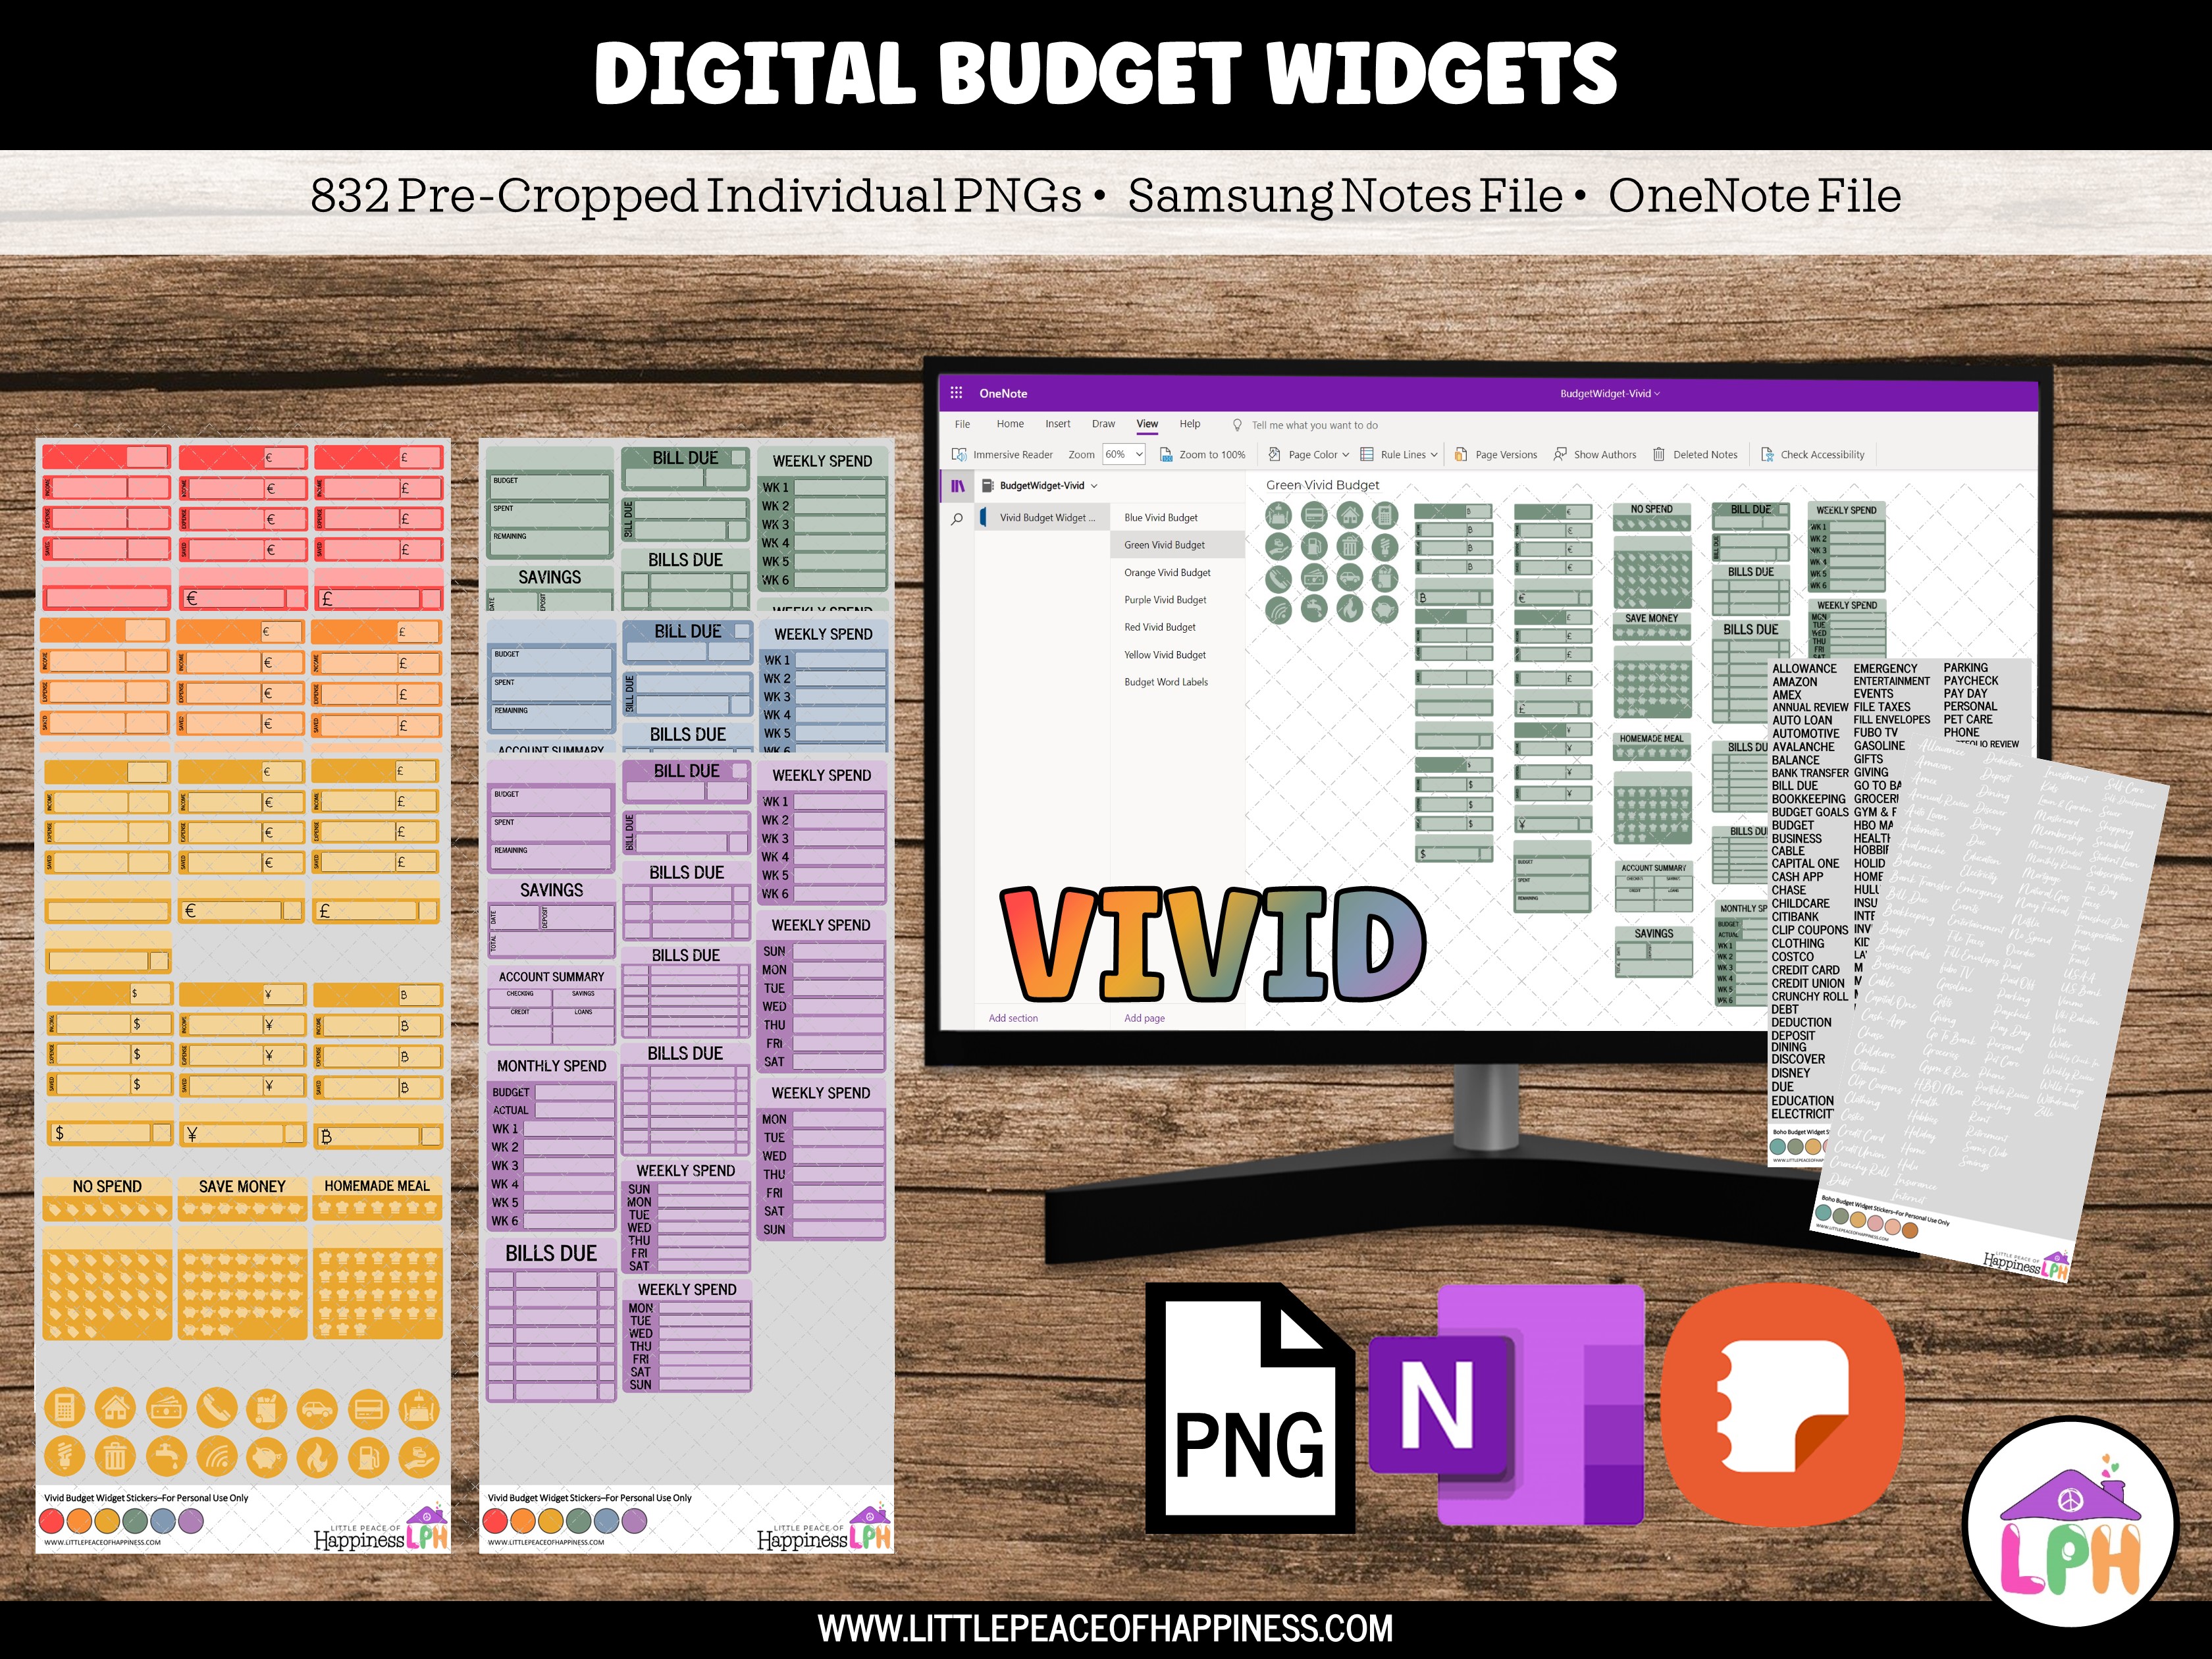 Digital Budget Stickers for Digital Budget Planning